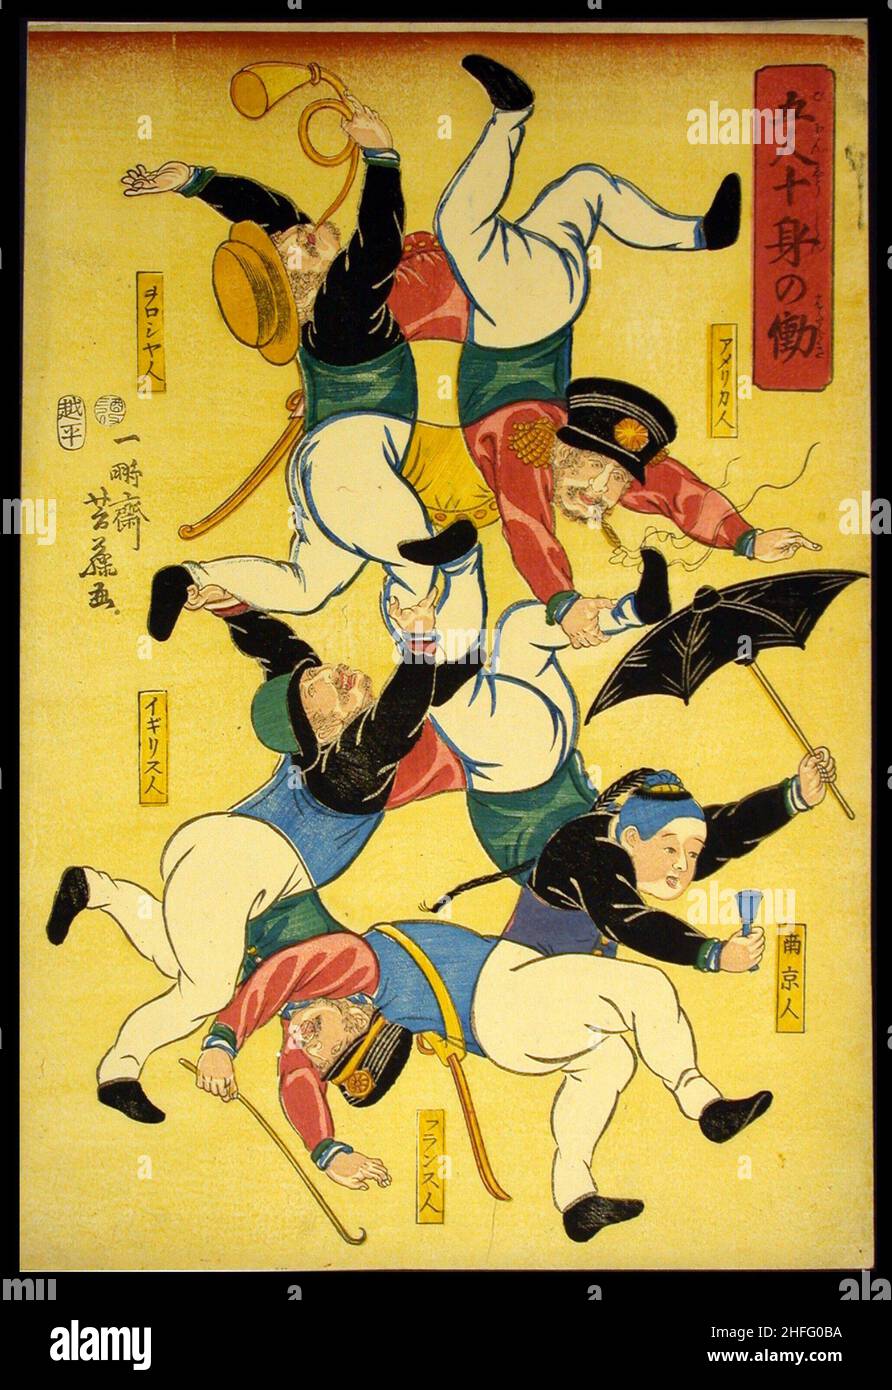 Five Men Doing the Work of Ten Bodies (Gonin jushin no hataraki), 1861. Stock Photo